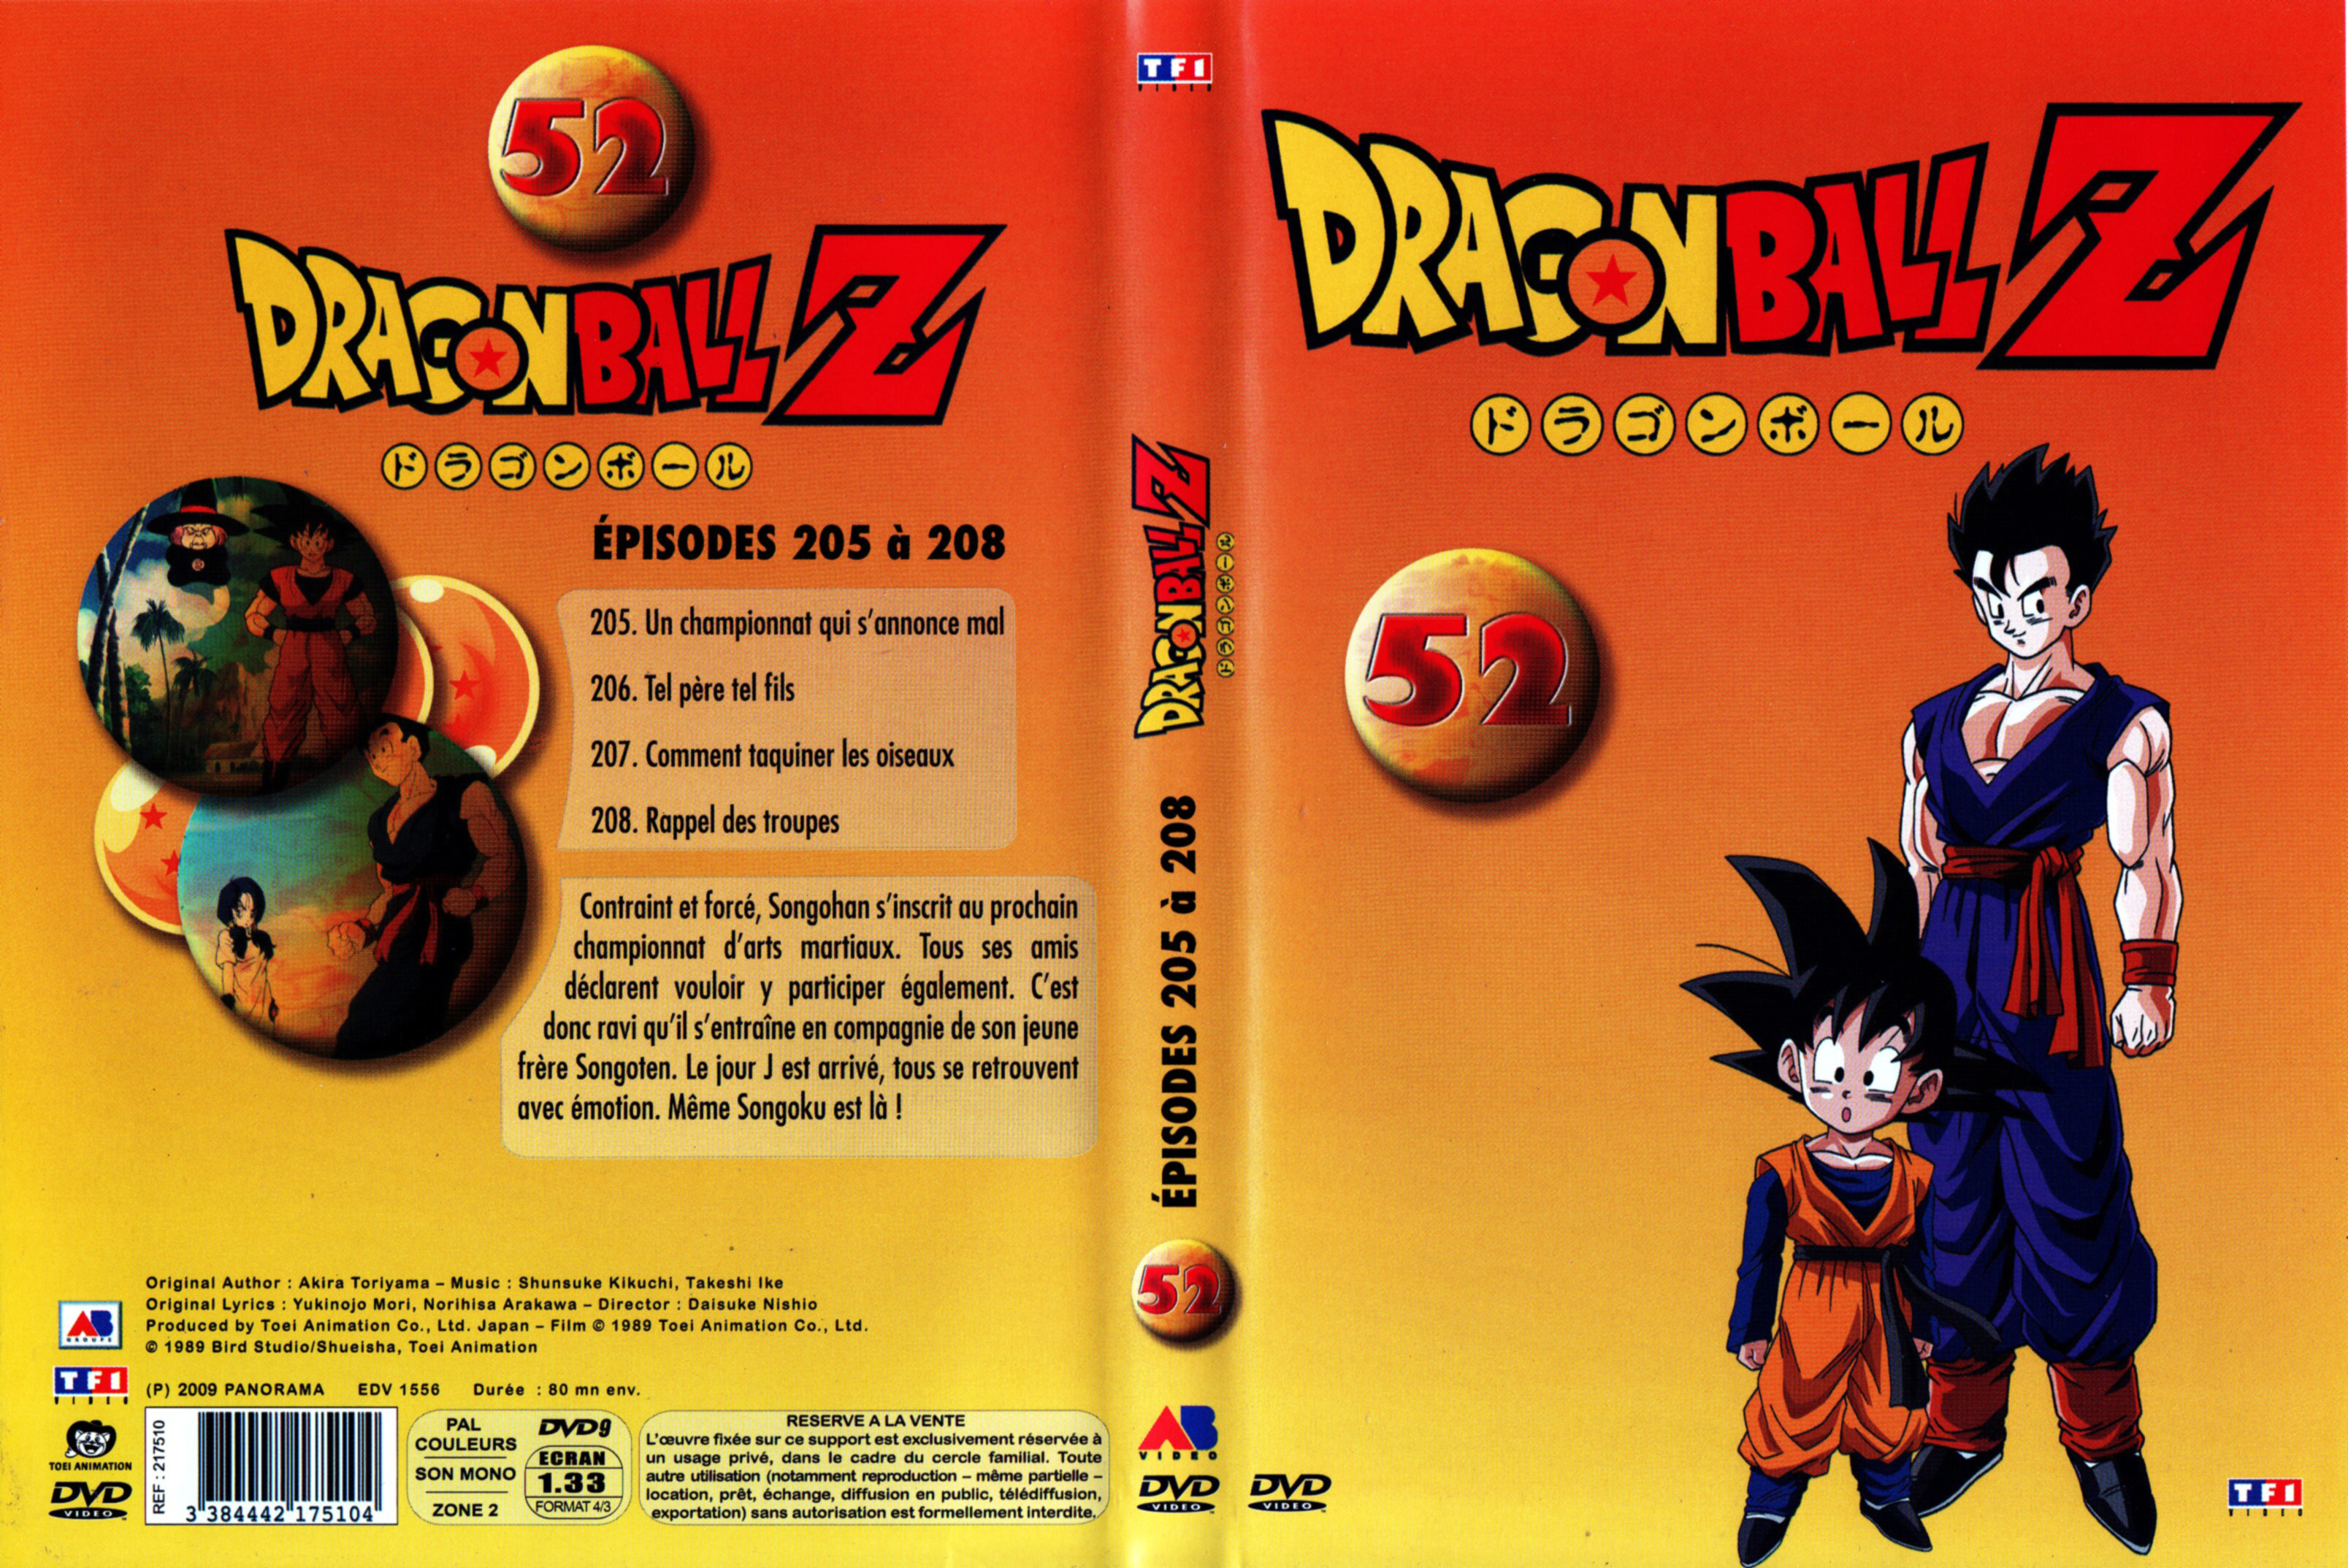 Jaquette DVD Dragon Ball Z vol 52